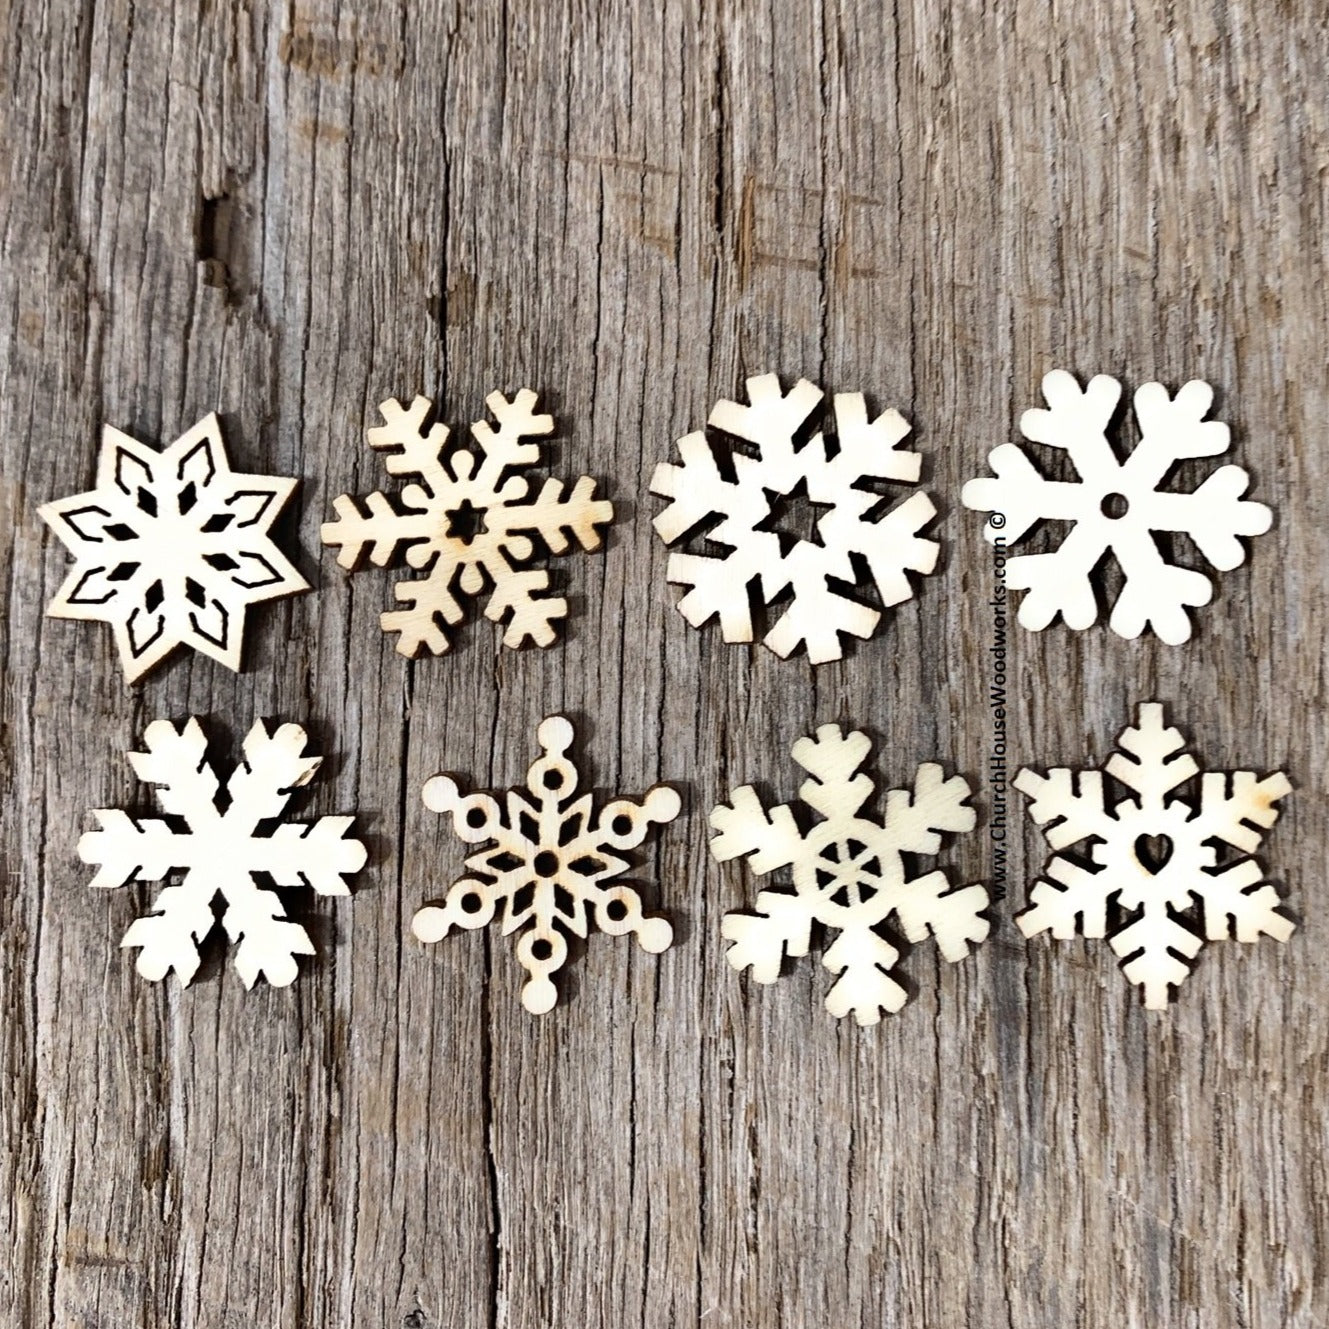 20pcs Wooden Christmas Snowflake Pegs 25-35mm White Wood Snowflakes  Scrapbooking